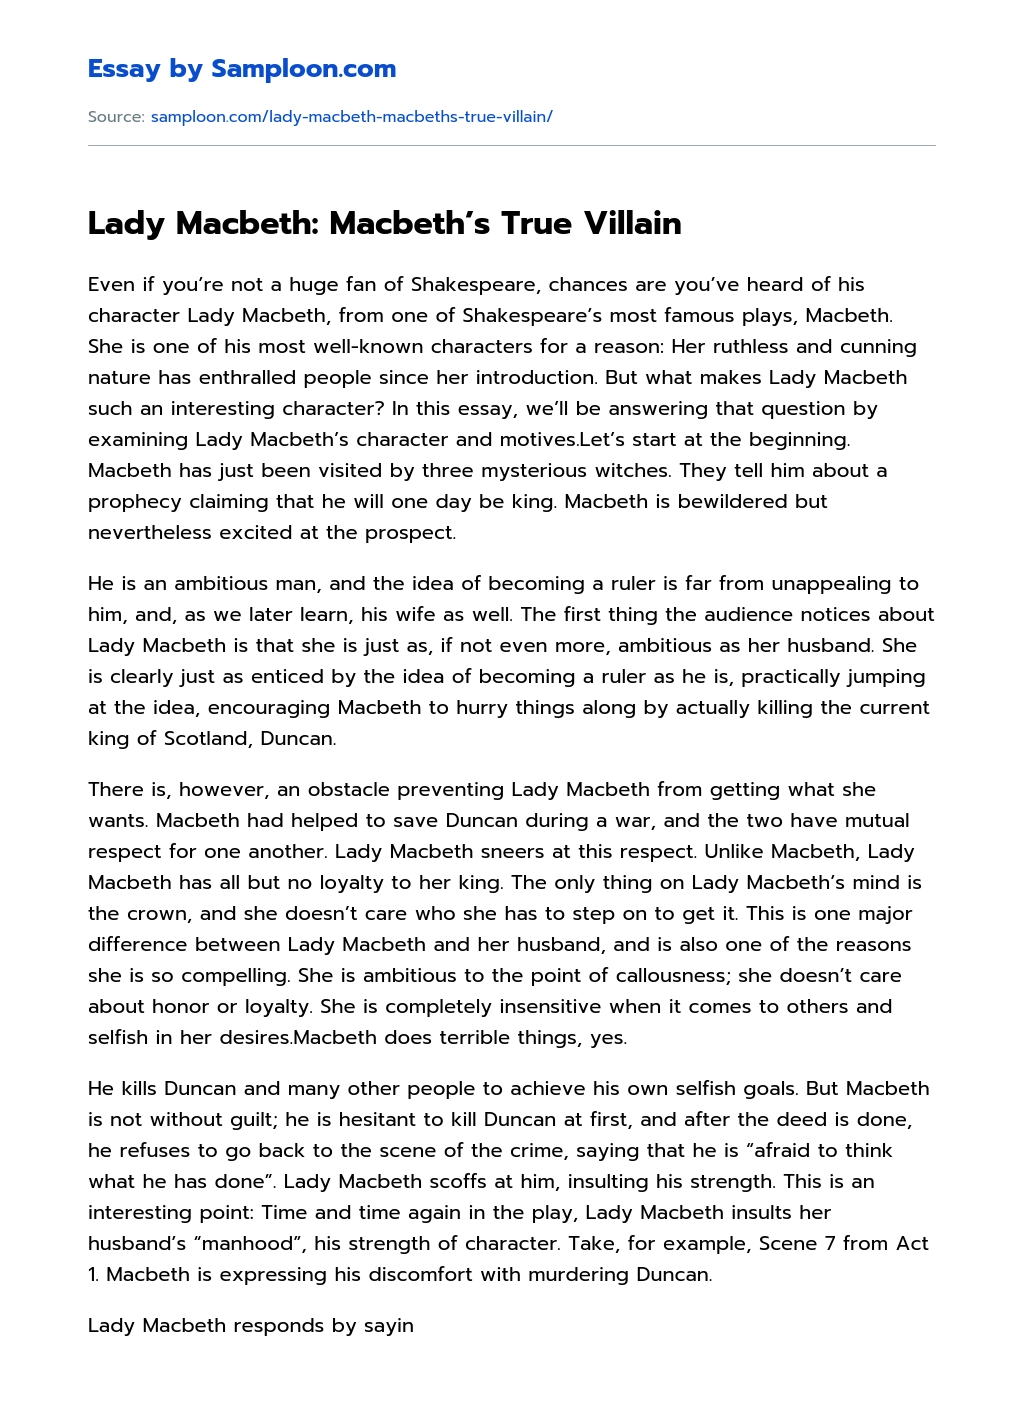 macbeth as a villain essay pdf